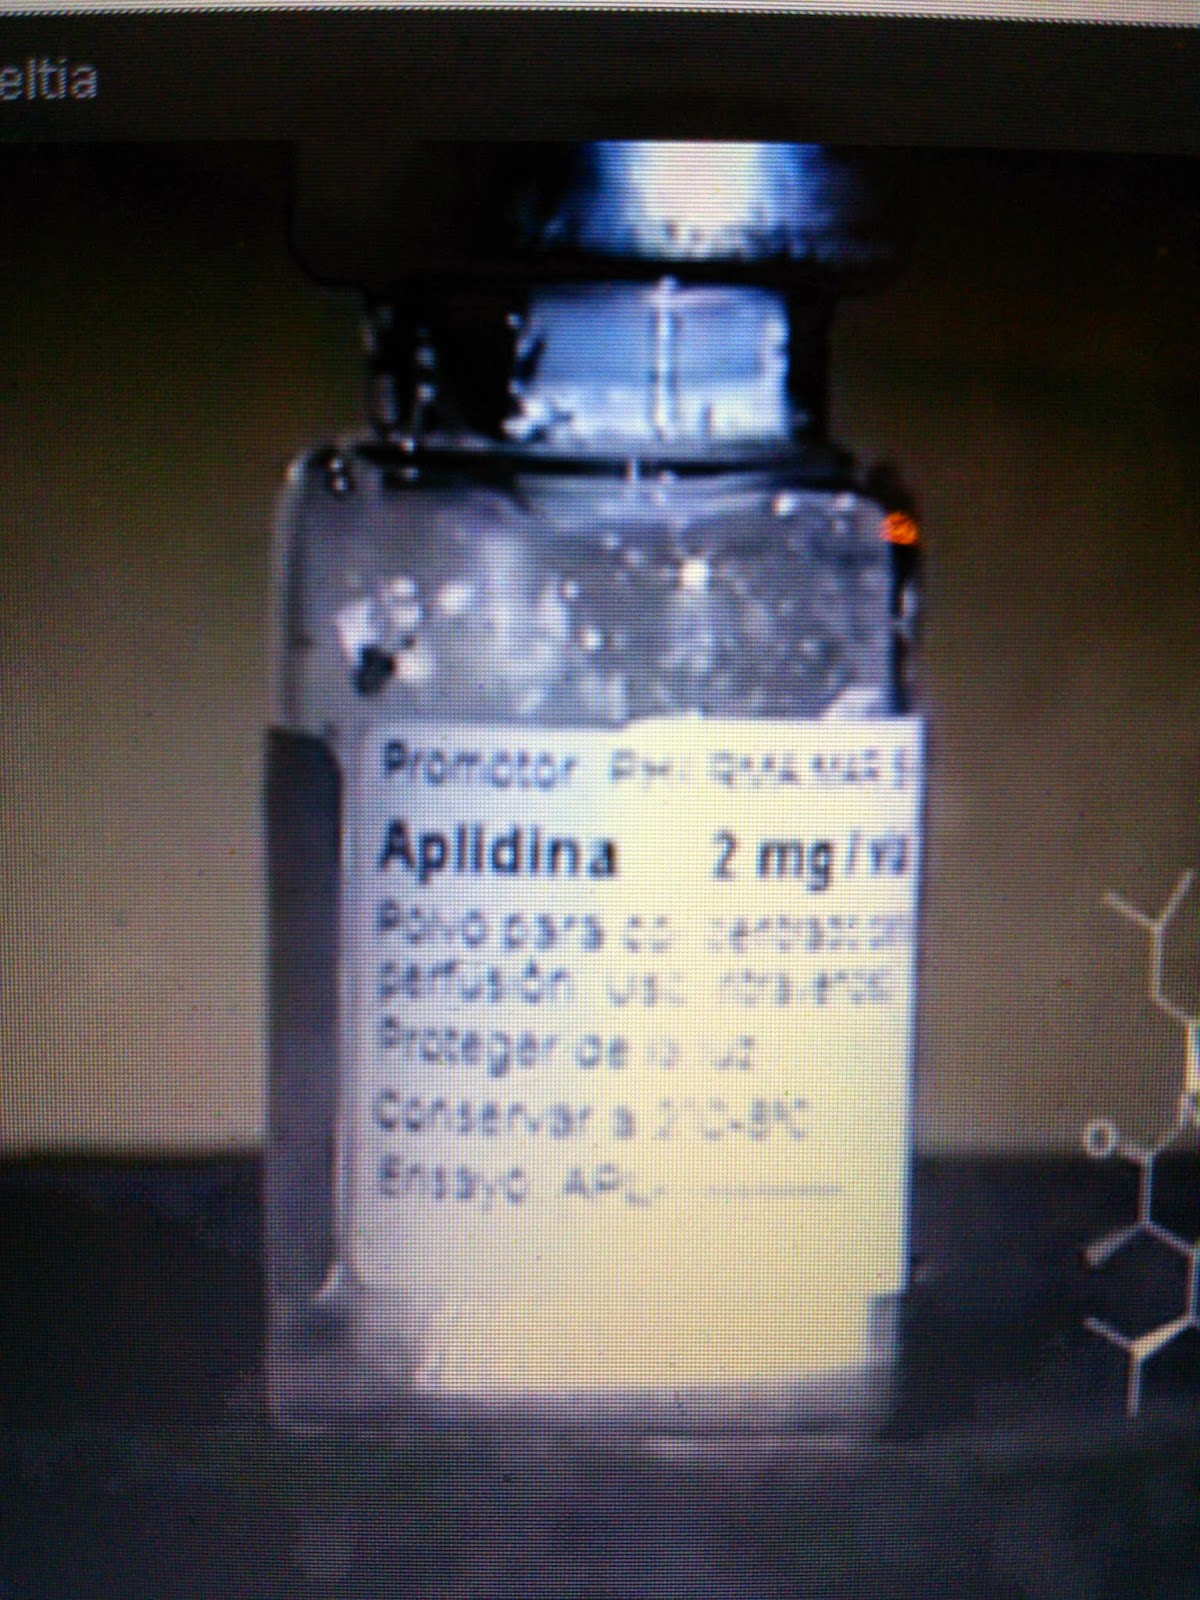 PharmaMar denuncia a la CE para comercializar Aplidin